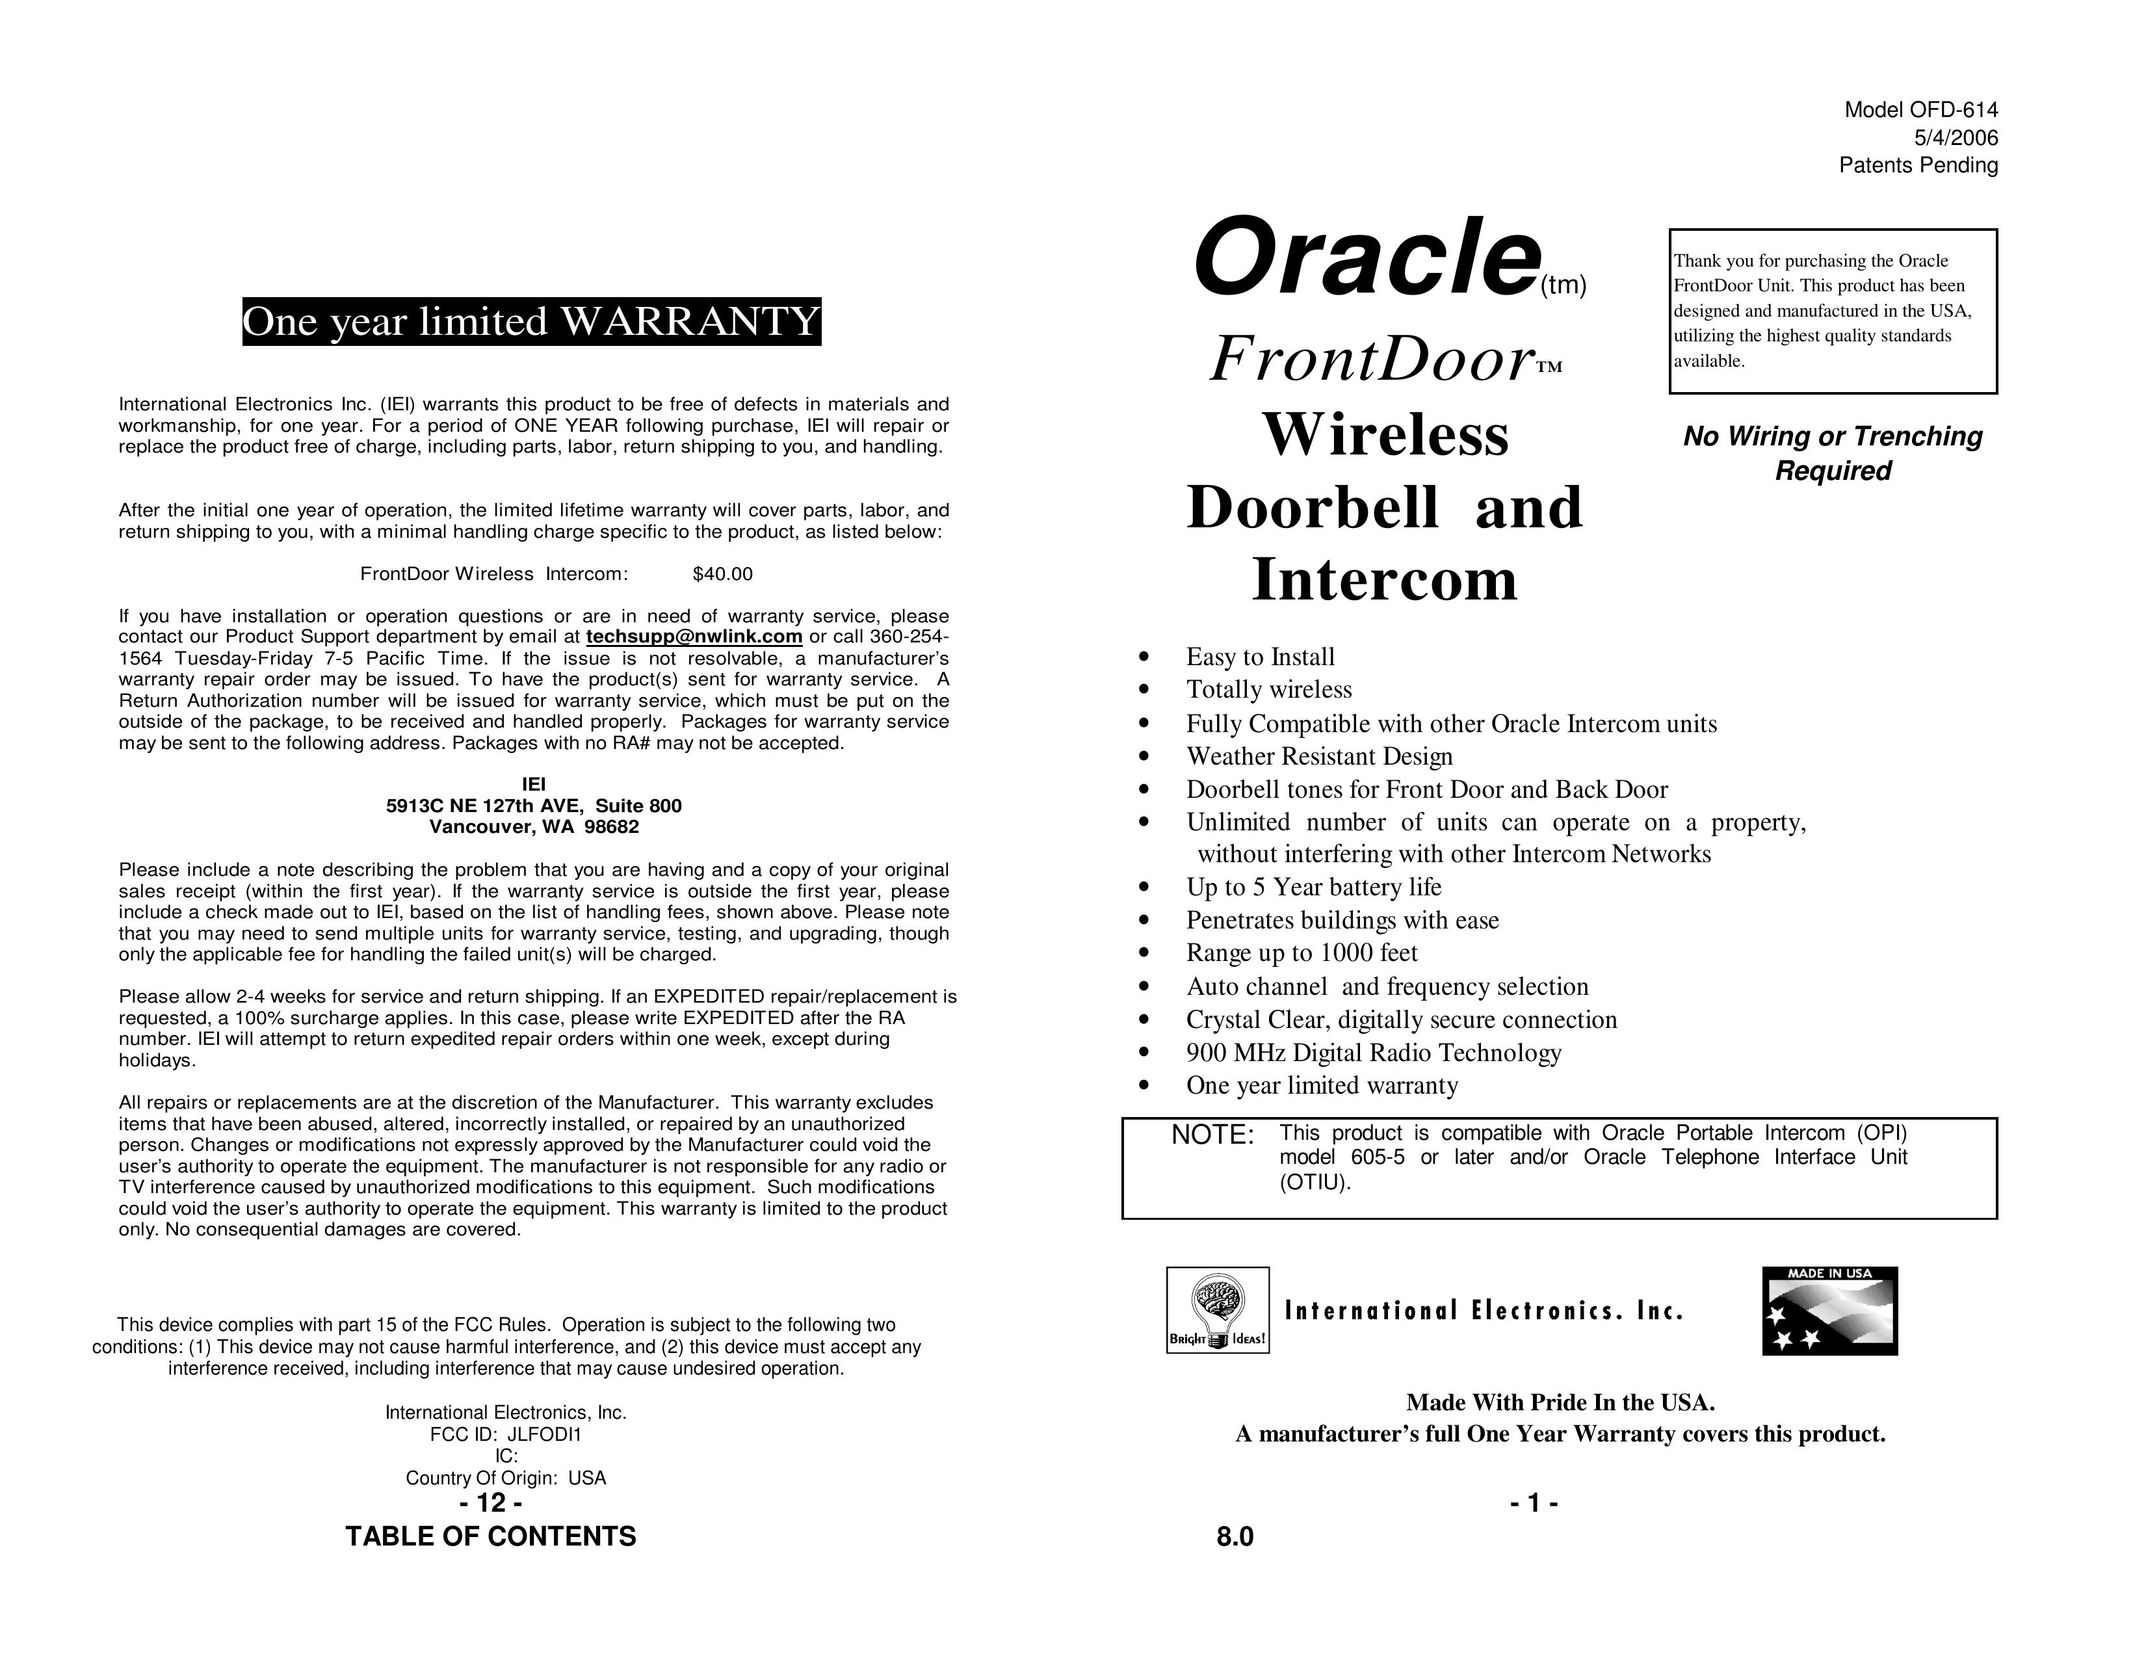 Oracle Audio Technologies OFD-614 Intercom System User Manual